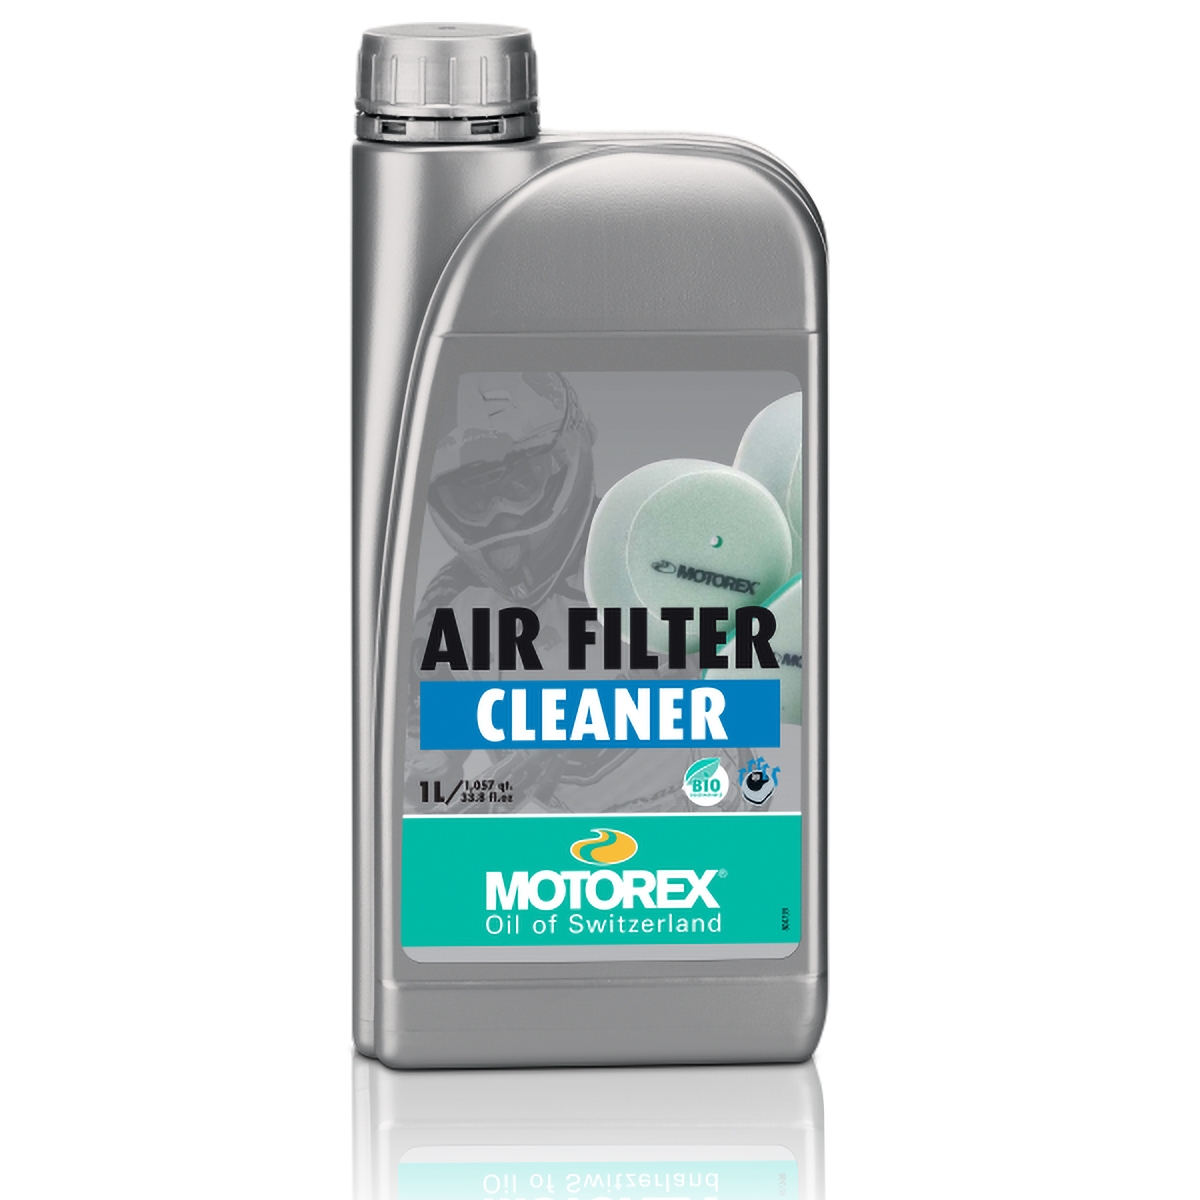 Nettoyant filtre à air MOTOREX Air Filter Cleaner biodegradable